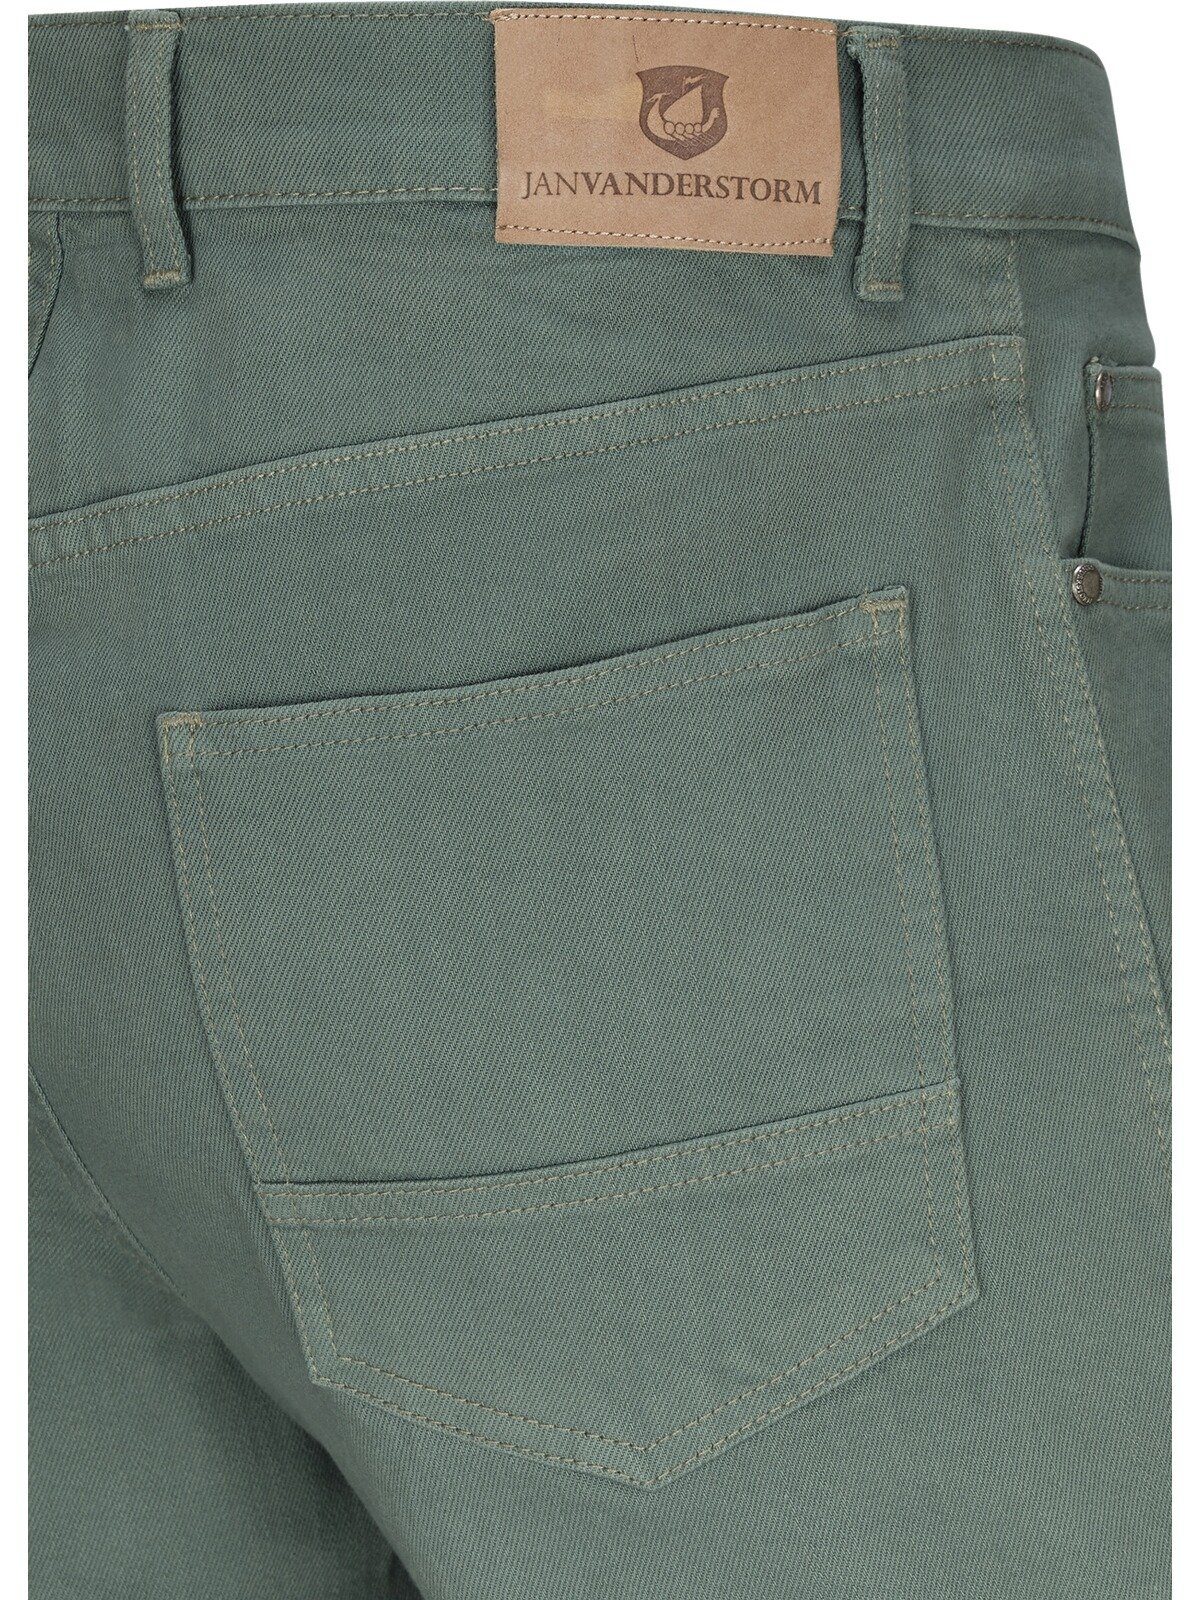 Jan GUNNAR angenehmer Vanderstorm grün 5-Pocket-Jeans Stretch-Denim